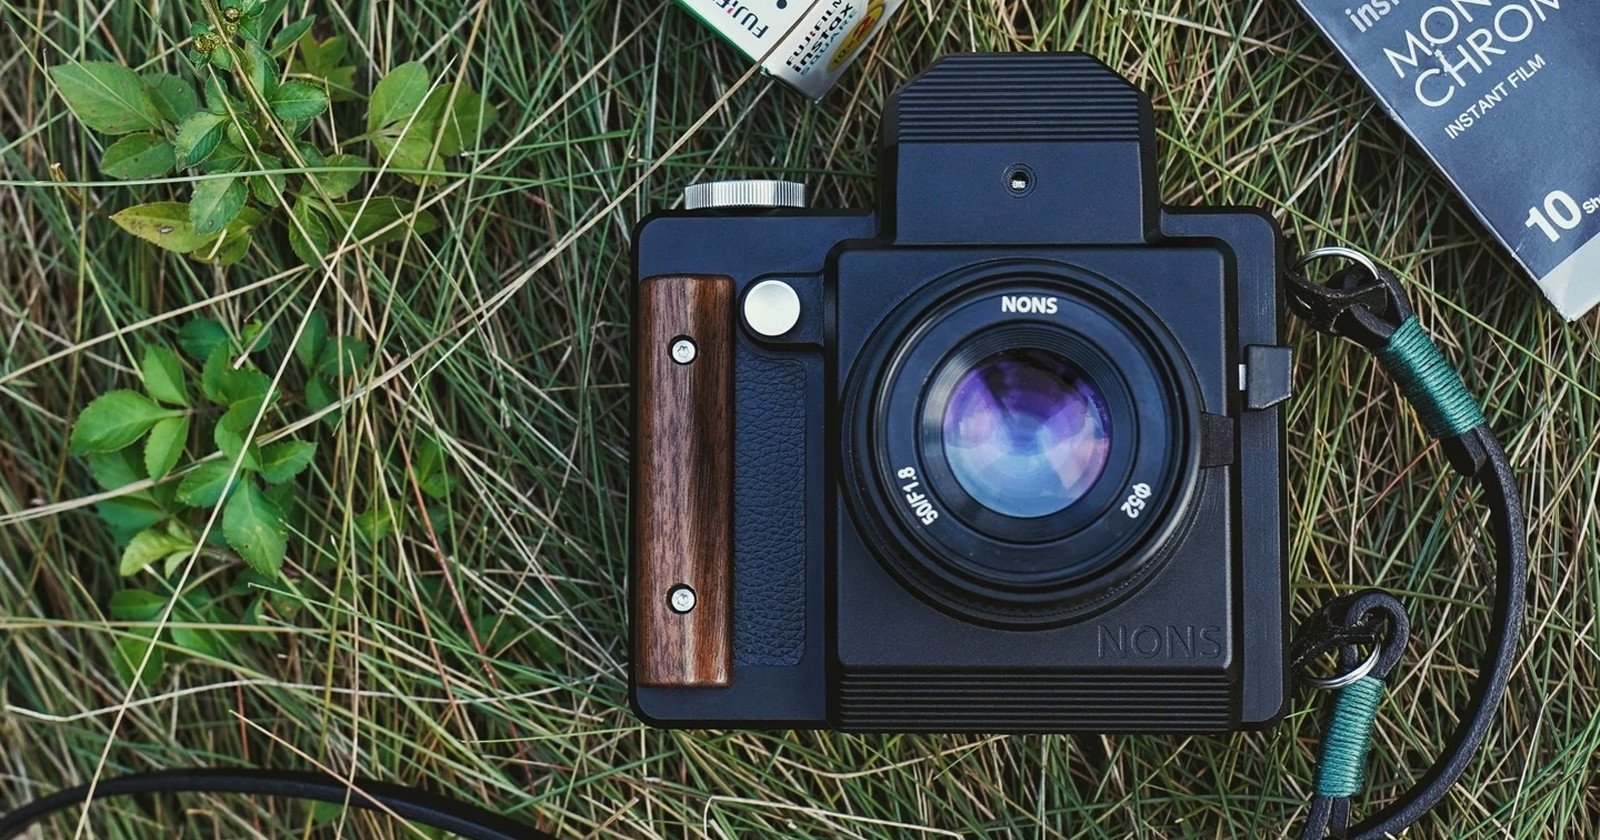  nons sl660 camera uses lenses shoots 